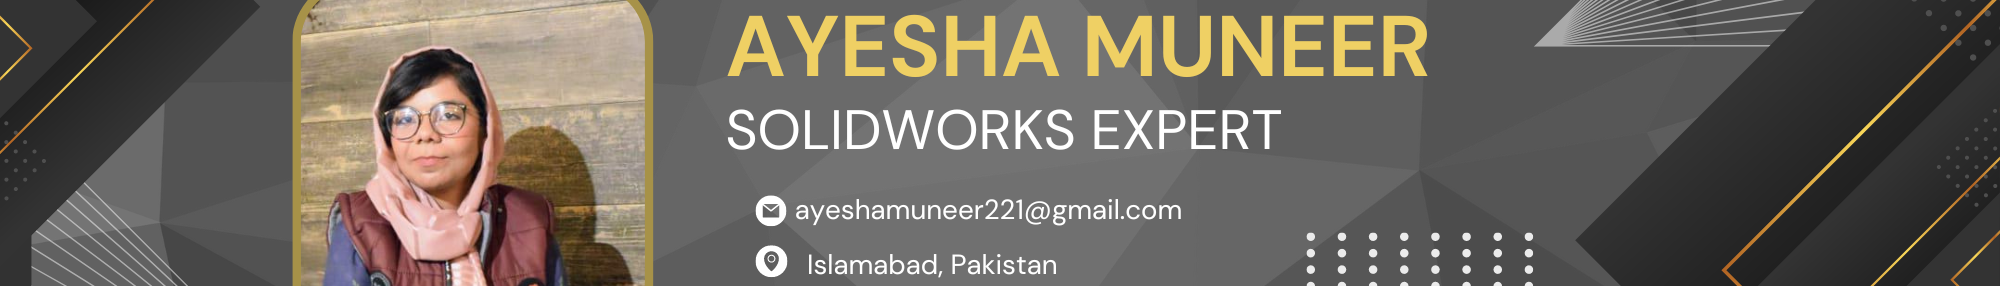 Ayesha Muneer's profile banner